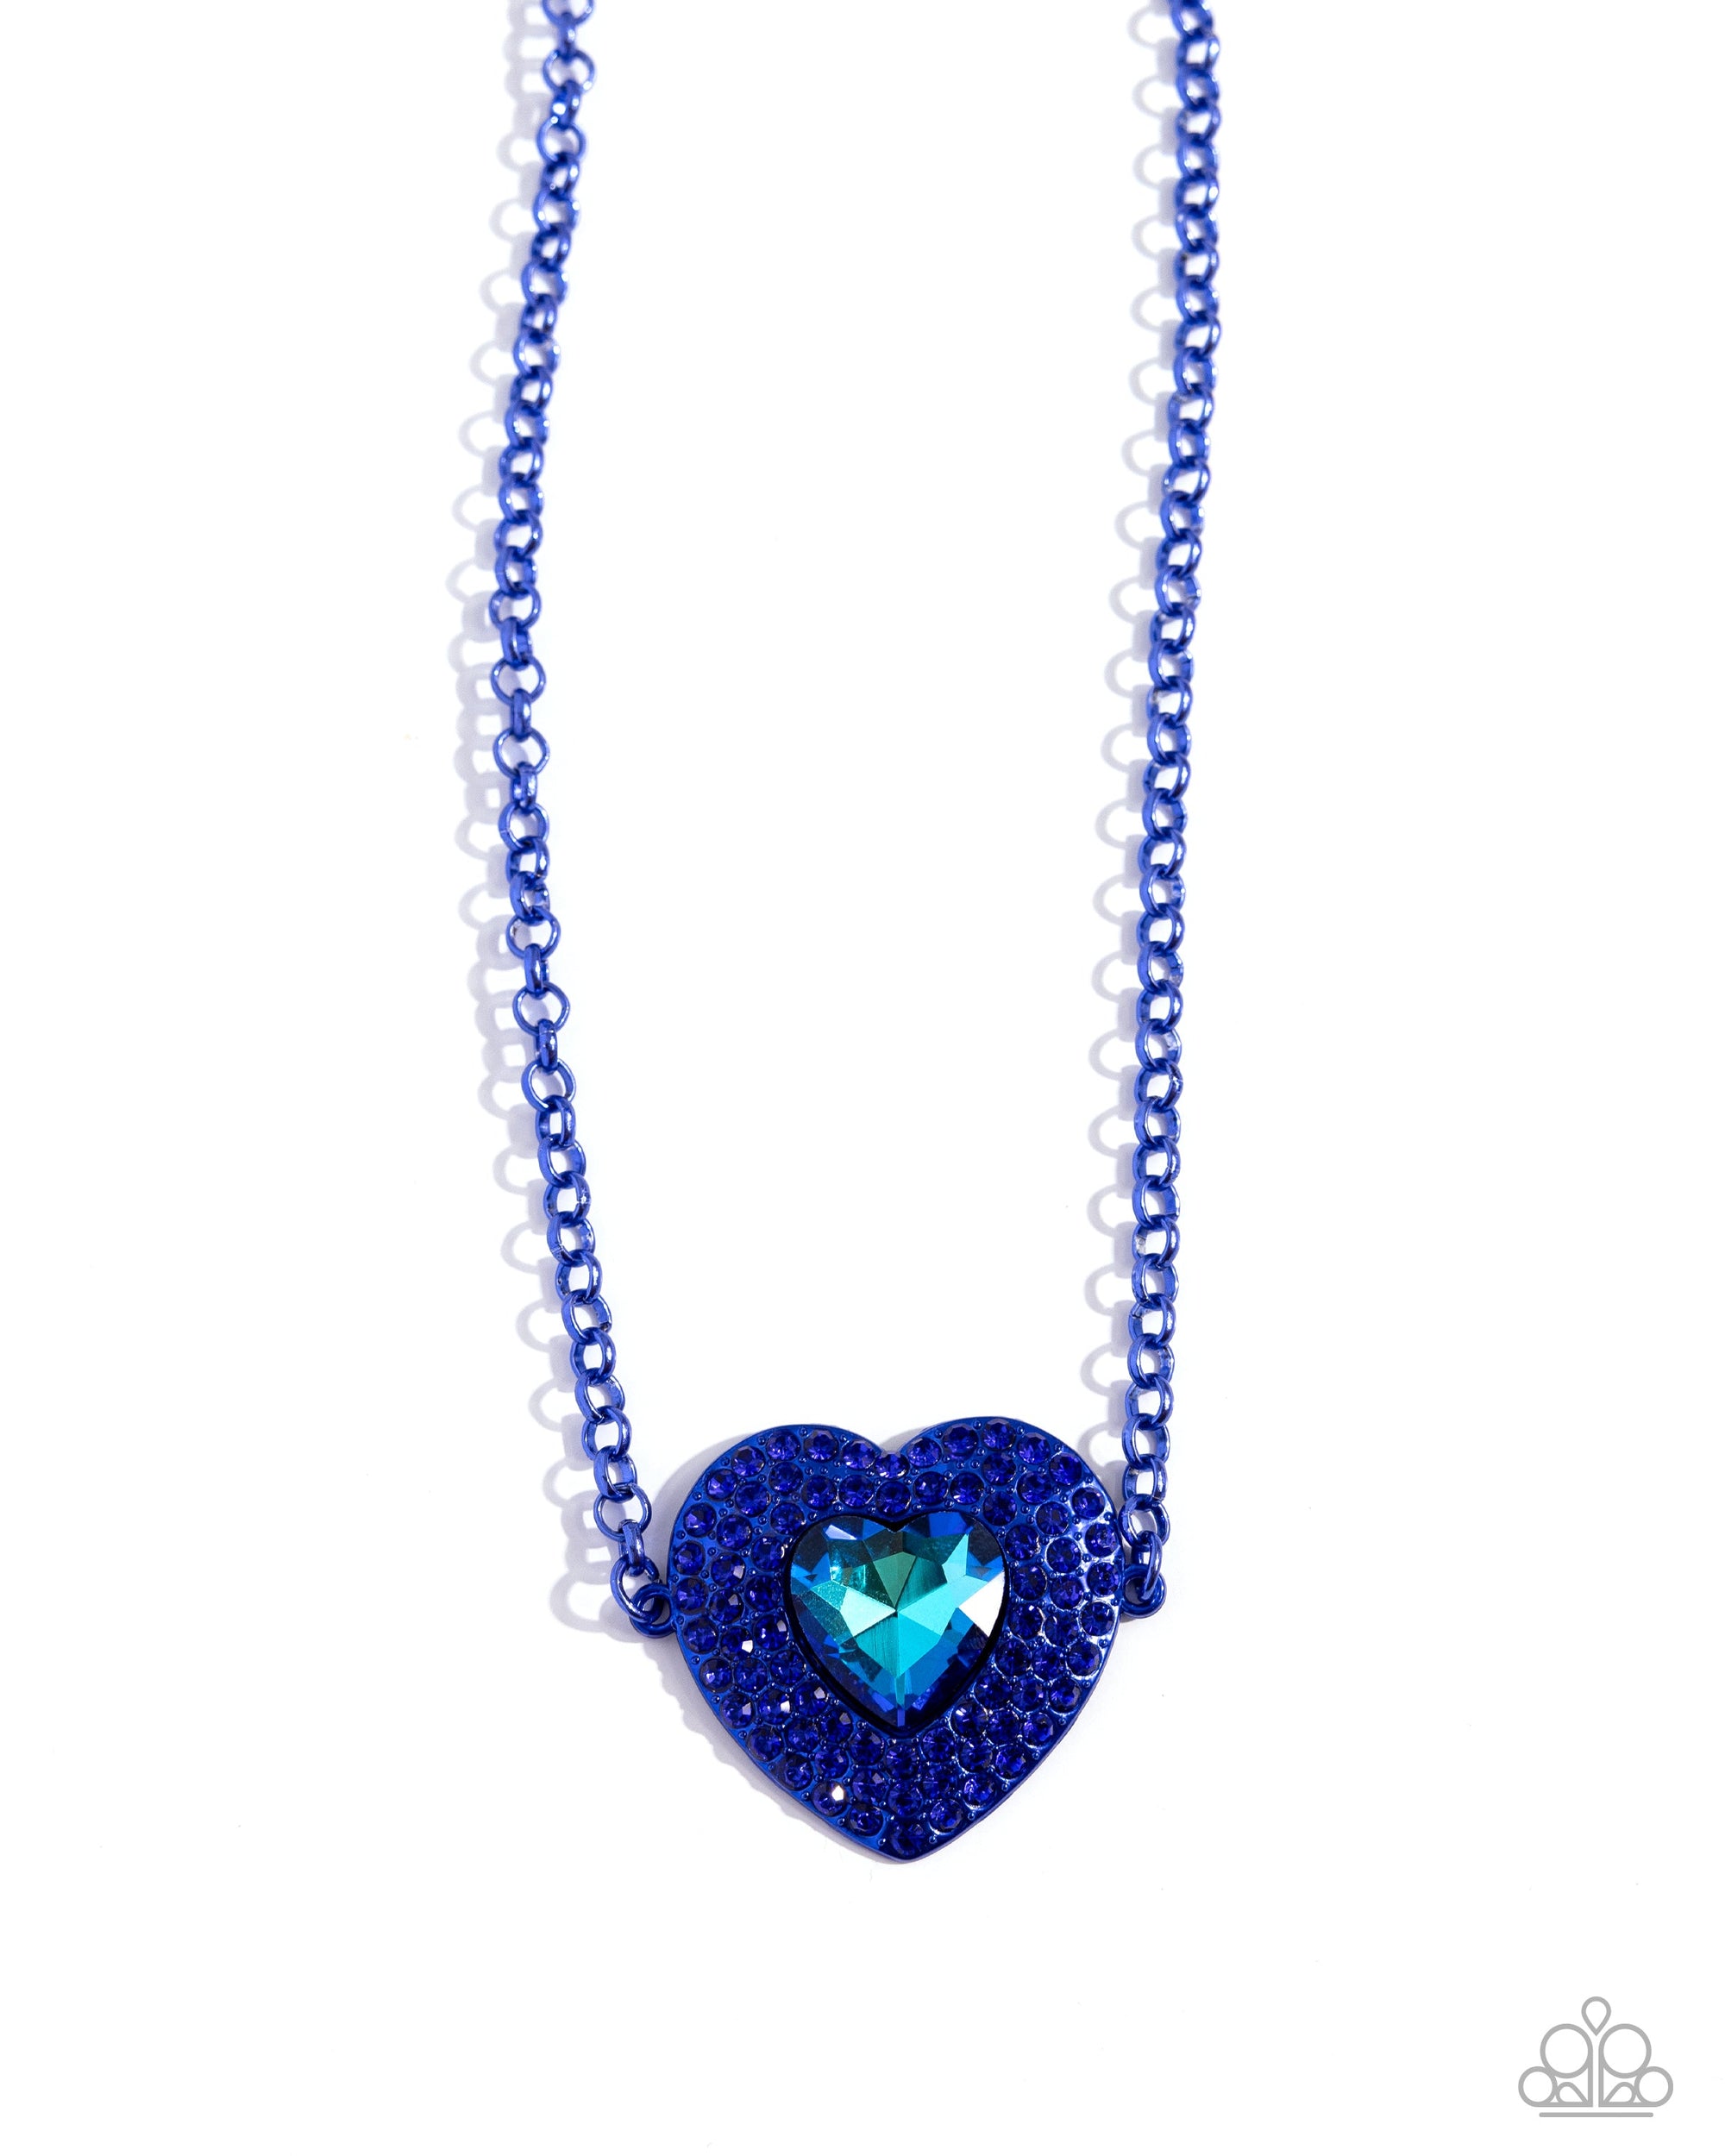 Locket Leisure Blue Rhinestone Heart Necklace - Paparazzi Accessories- lightbox - CarasShop.com - $5 Jewelry by Cara Jewels